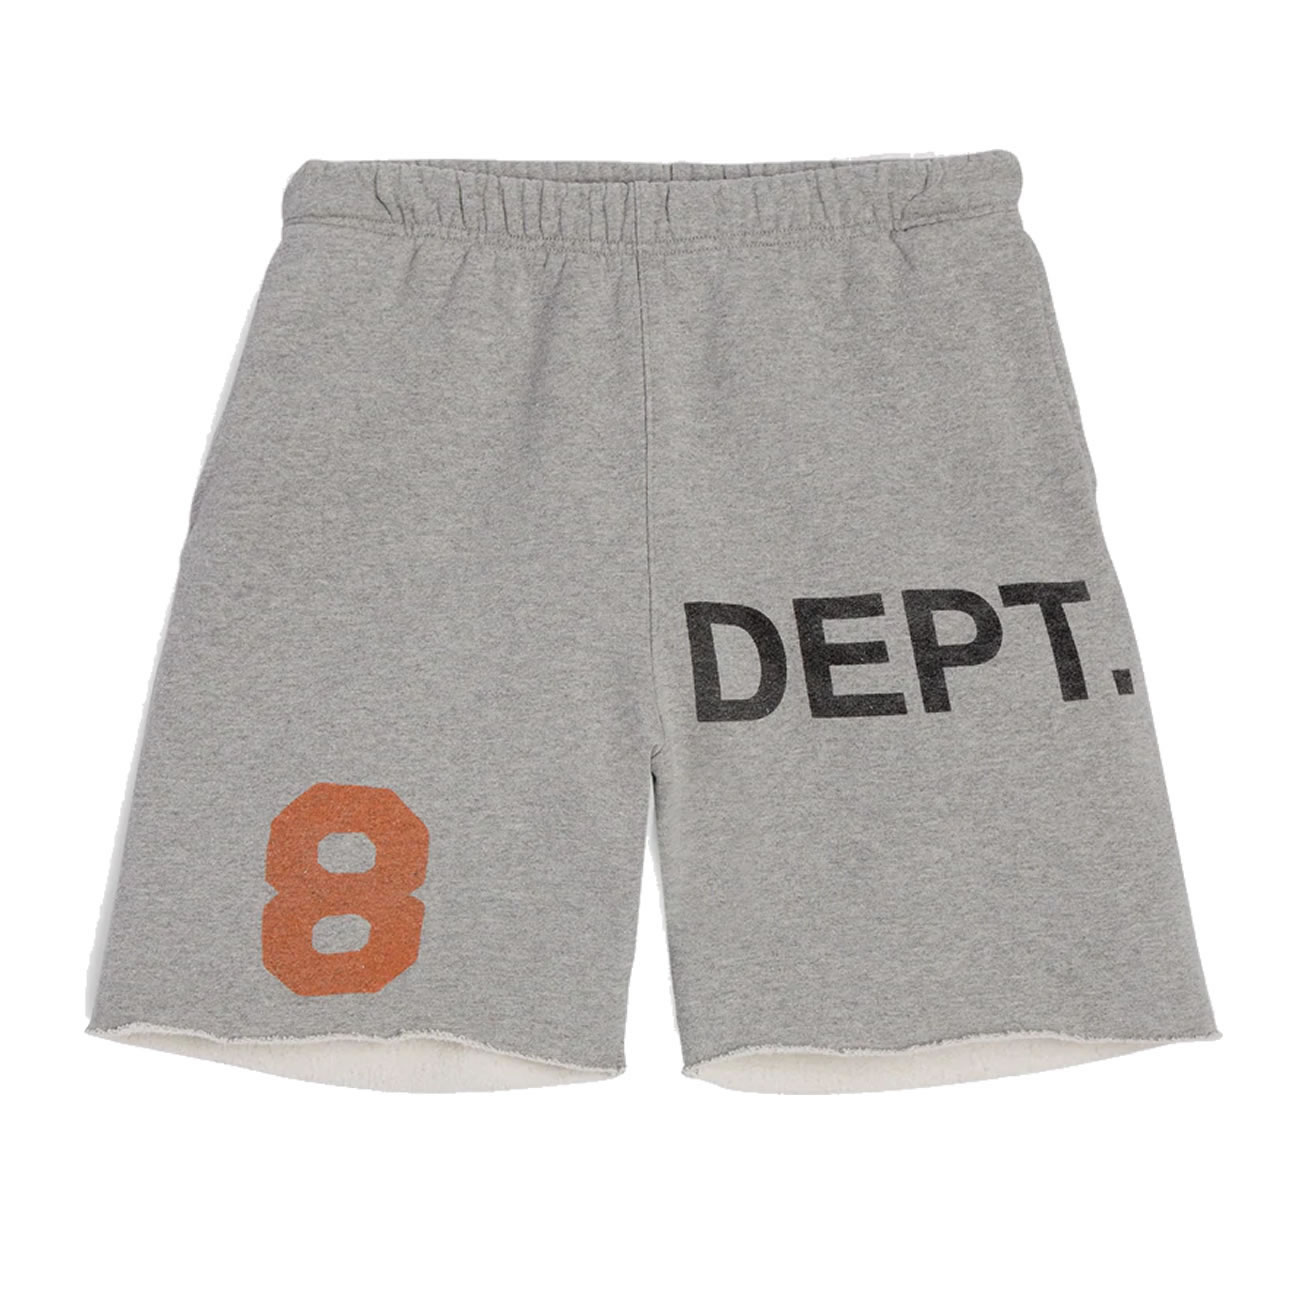 Gallery Dept Logo Sweat Shorts Trousers (1) - newkick.org